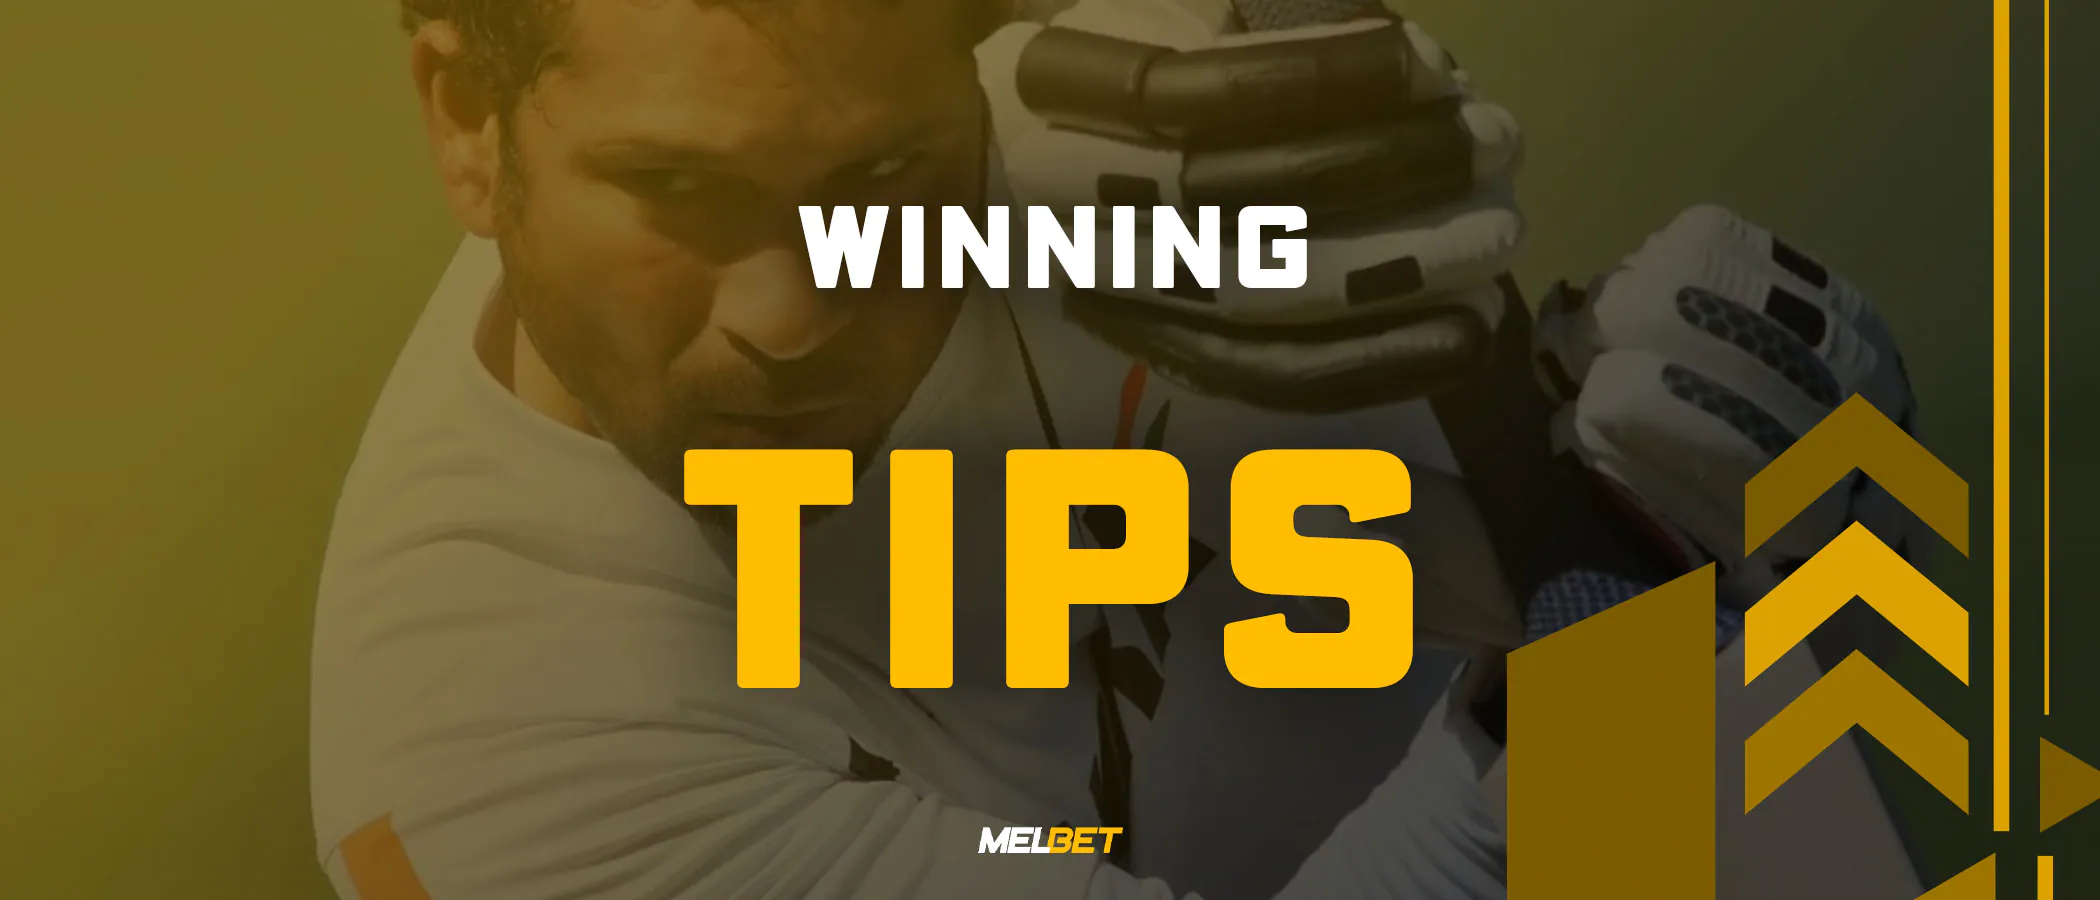 Melbet betting winning tips